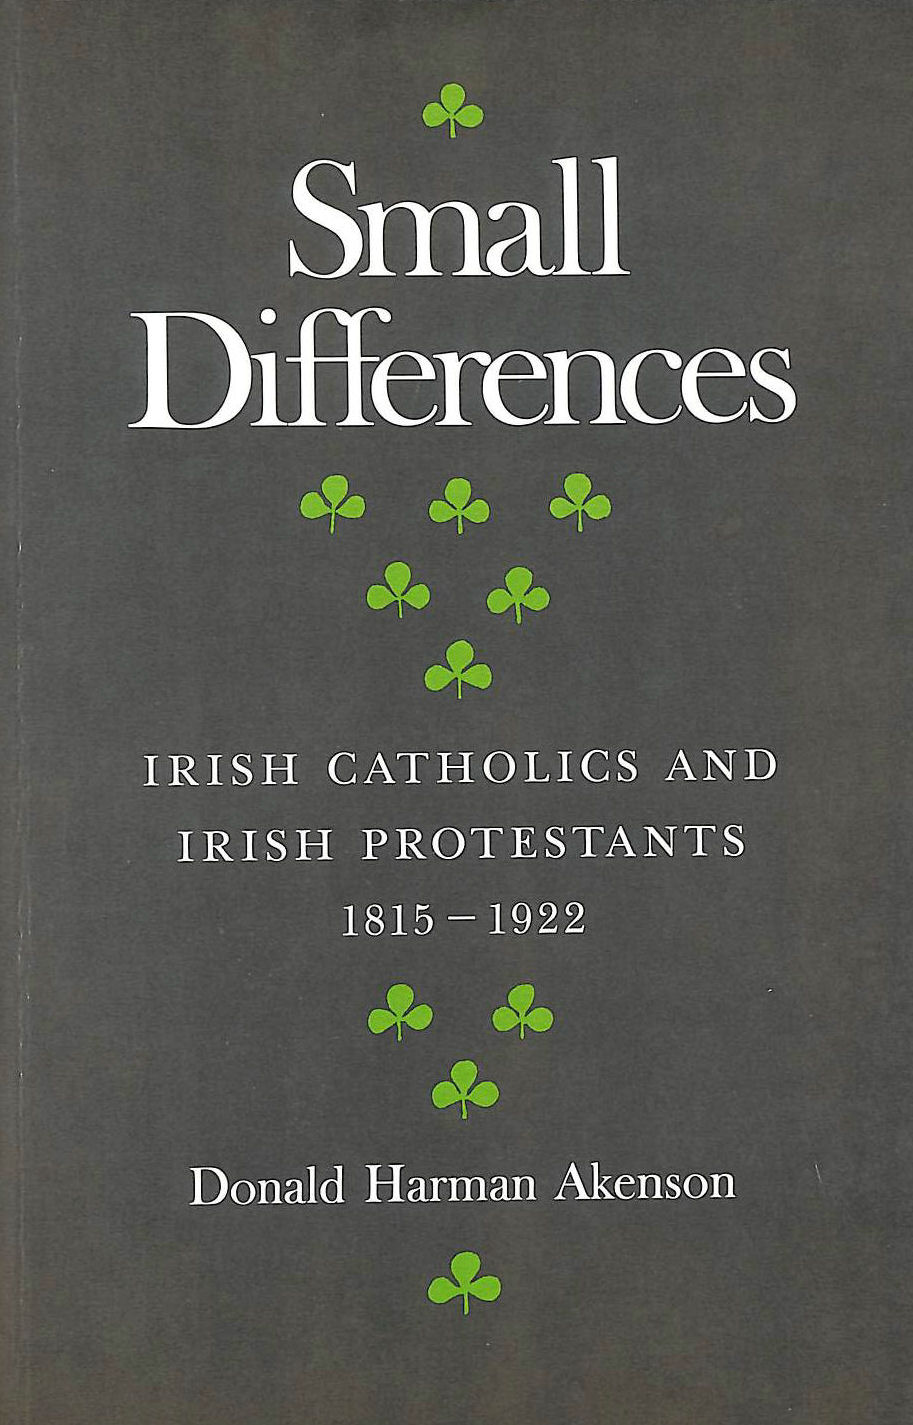 DONALD HARMAN AKENSON - Small Differences: Irish Catholics and Protestants, 1815-1922 - An International Perspective